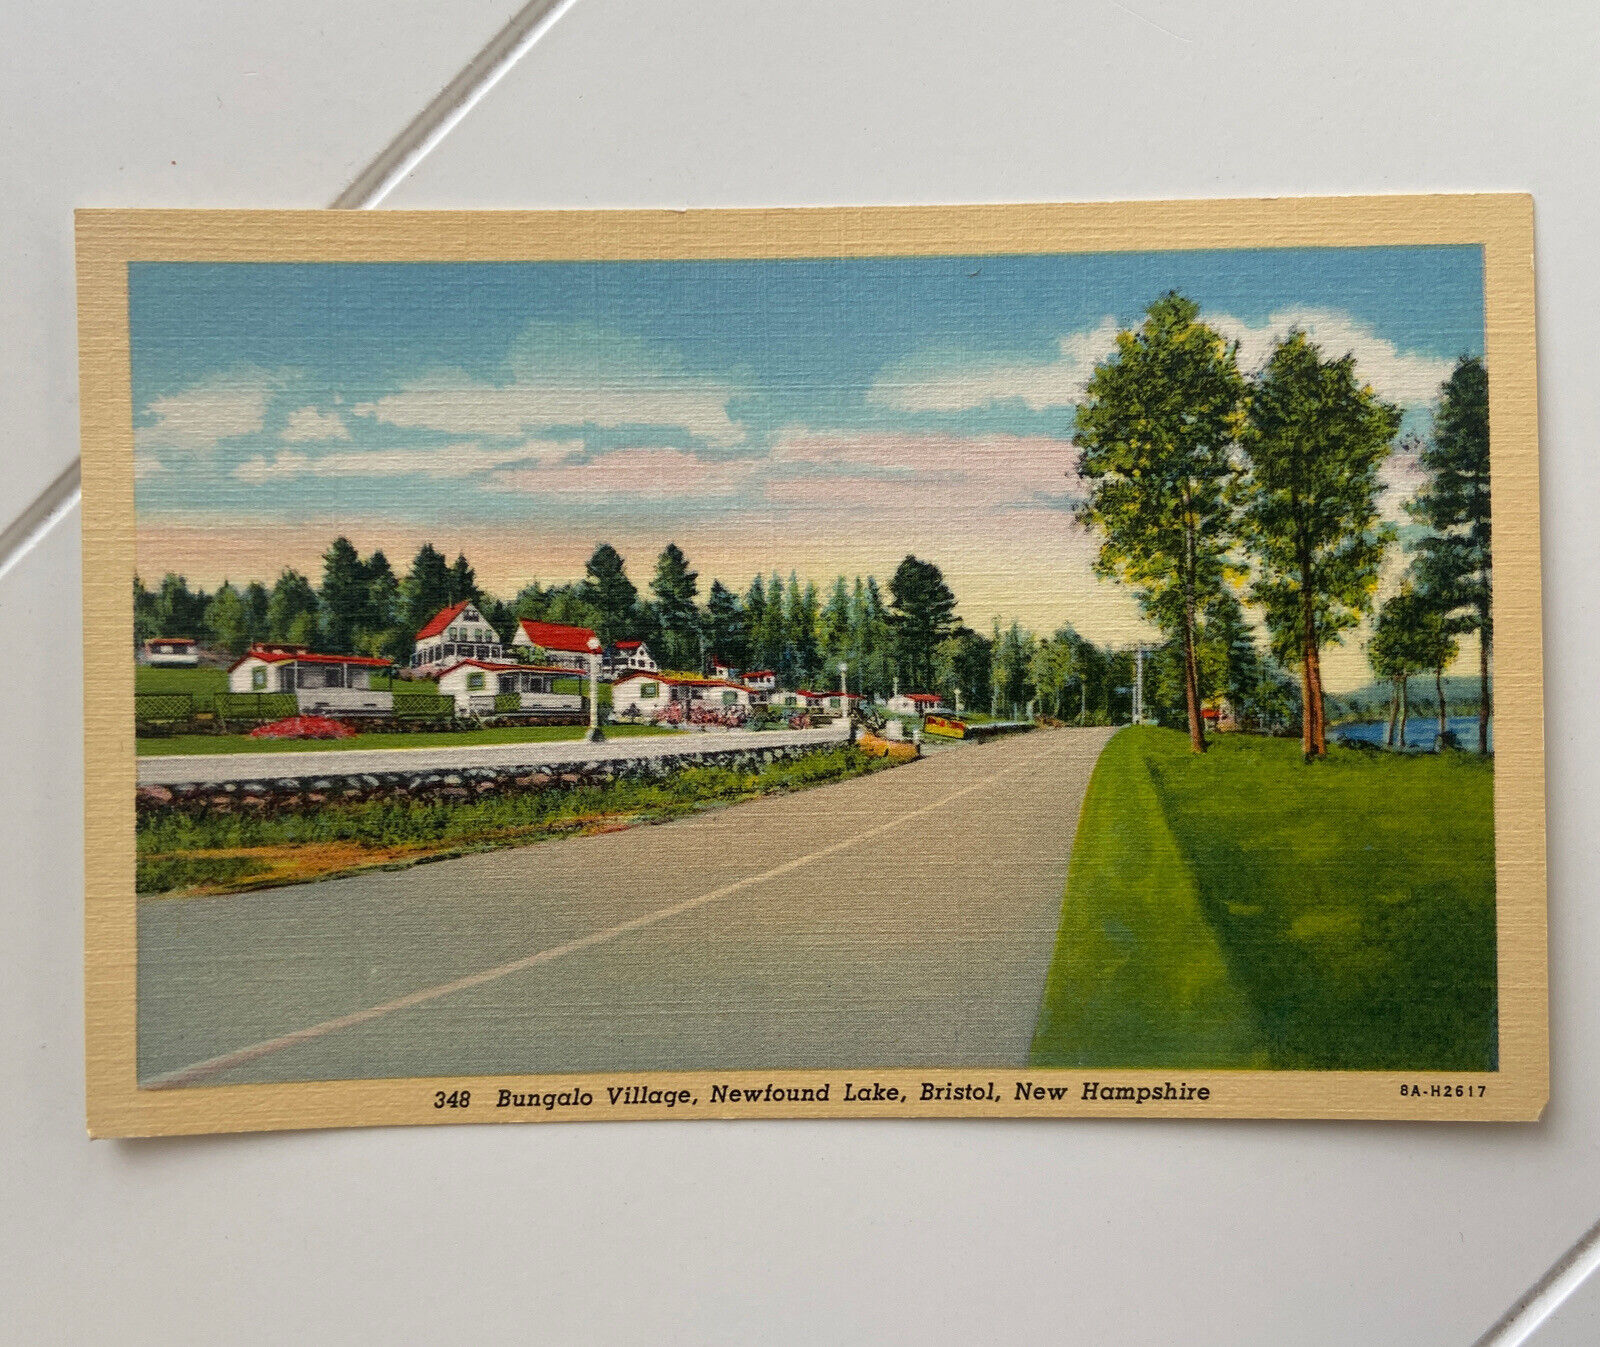 Bungalo Village Newfound Lake Bristol New Hampshire Vintage Postcard